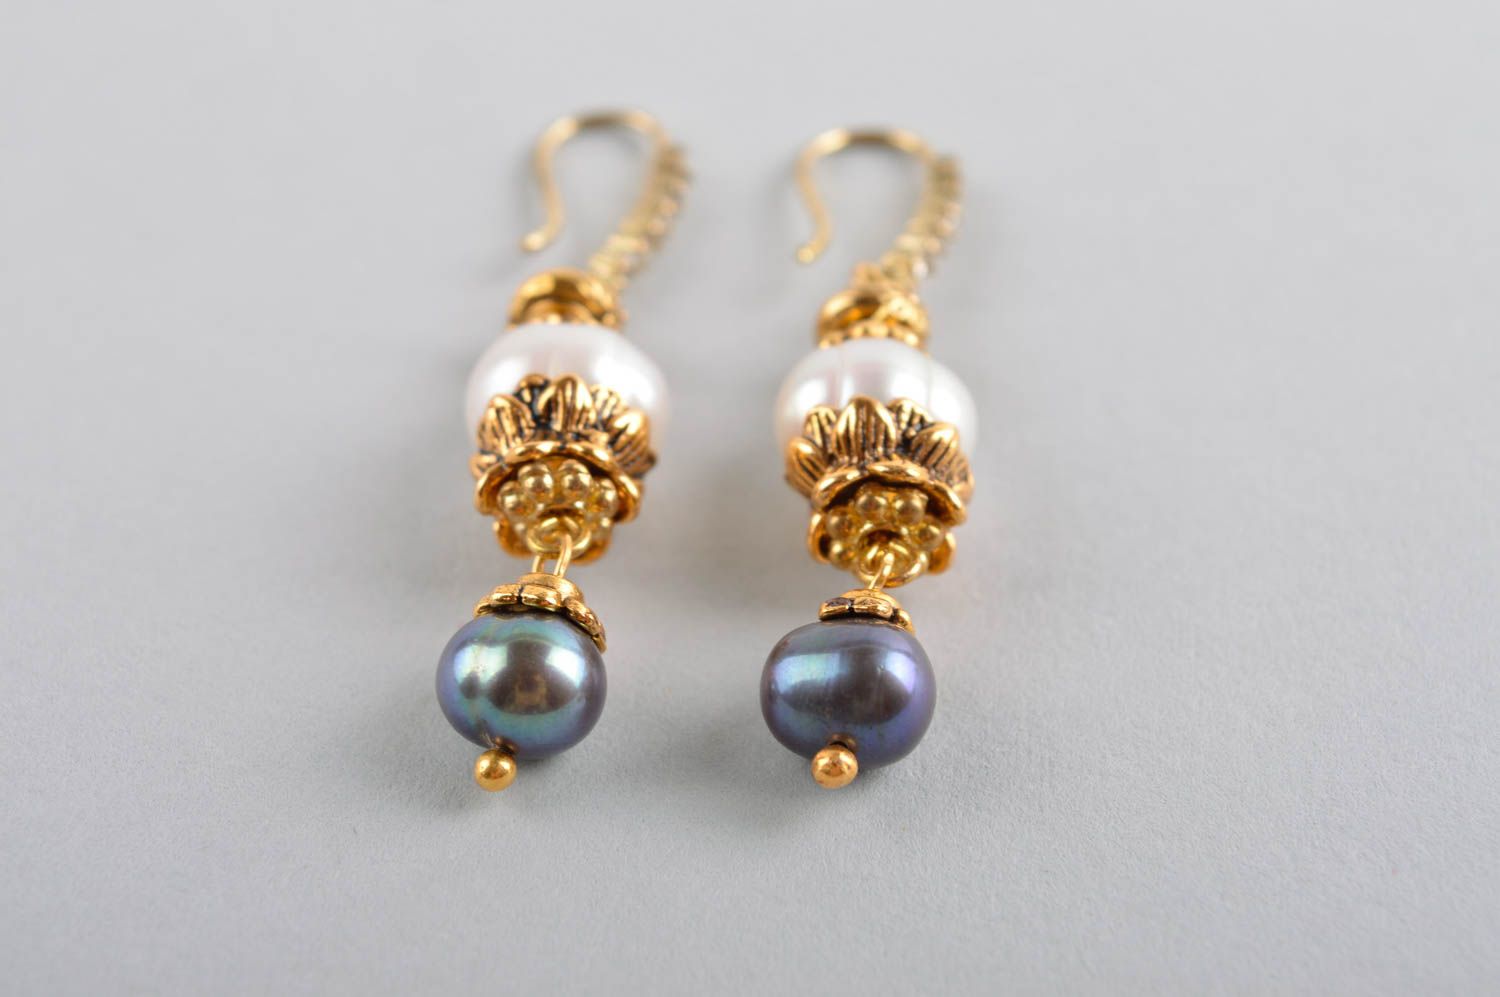 Handmade earrings long earrings fashion jewelry designer accessories gift ideas photo 4